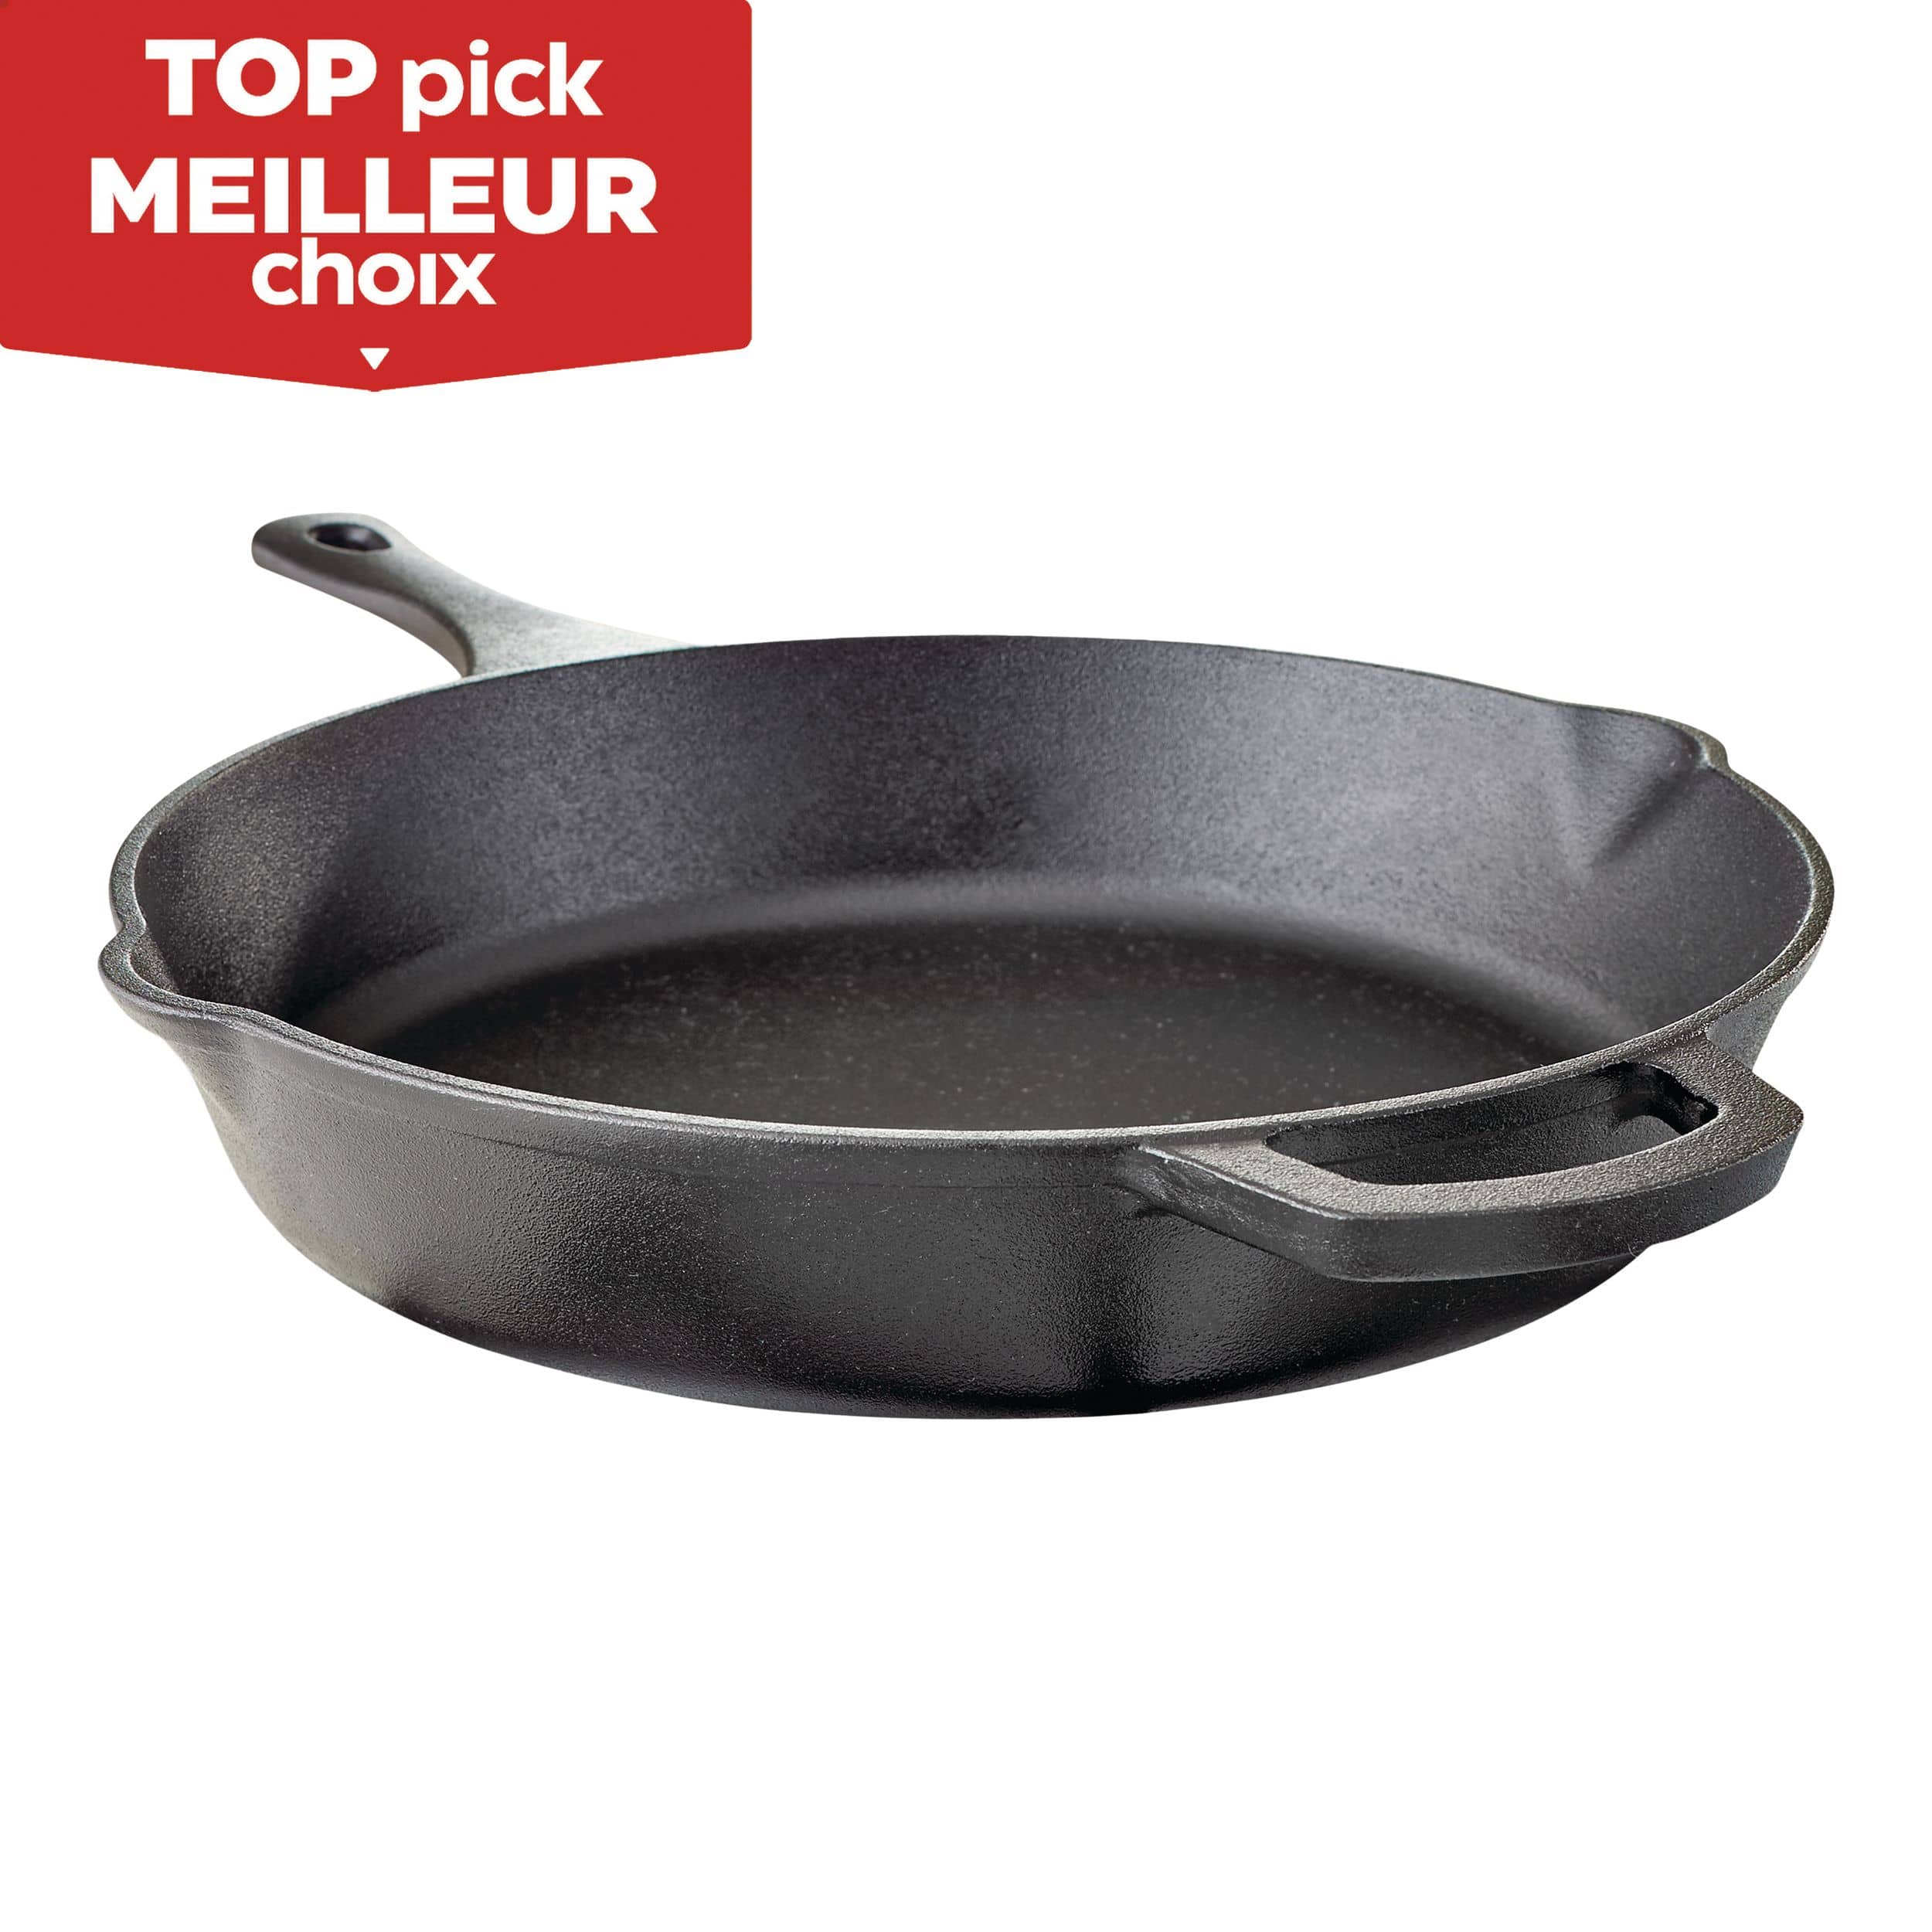 MASTER Chef Preseasoned Cast Iron Frying Pan, Oven Safe, Black, 30.4cm